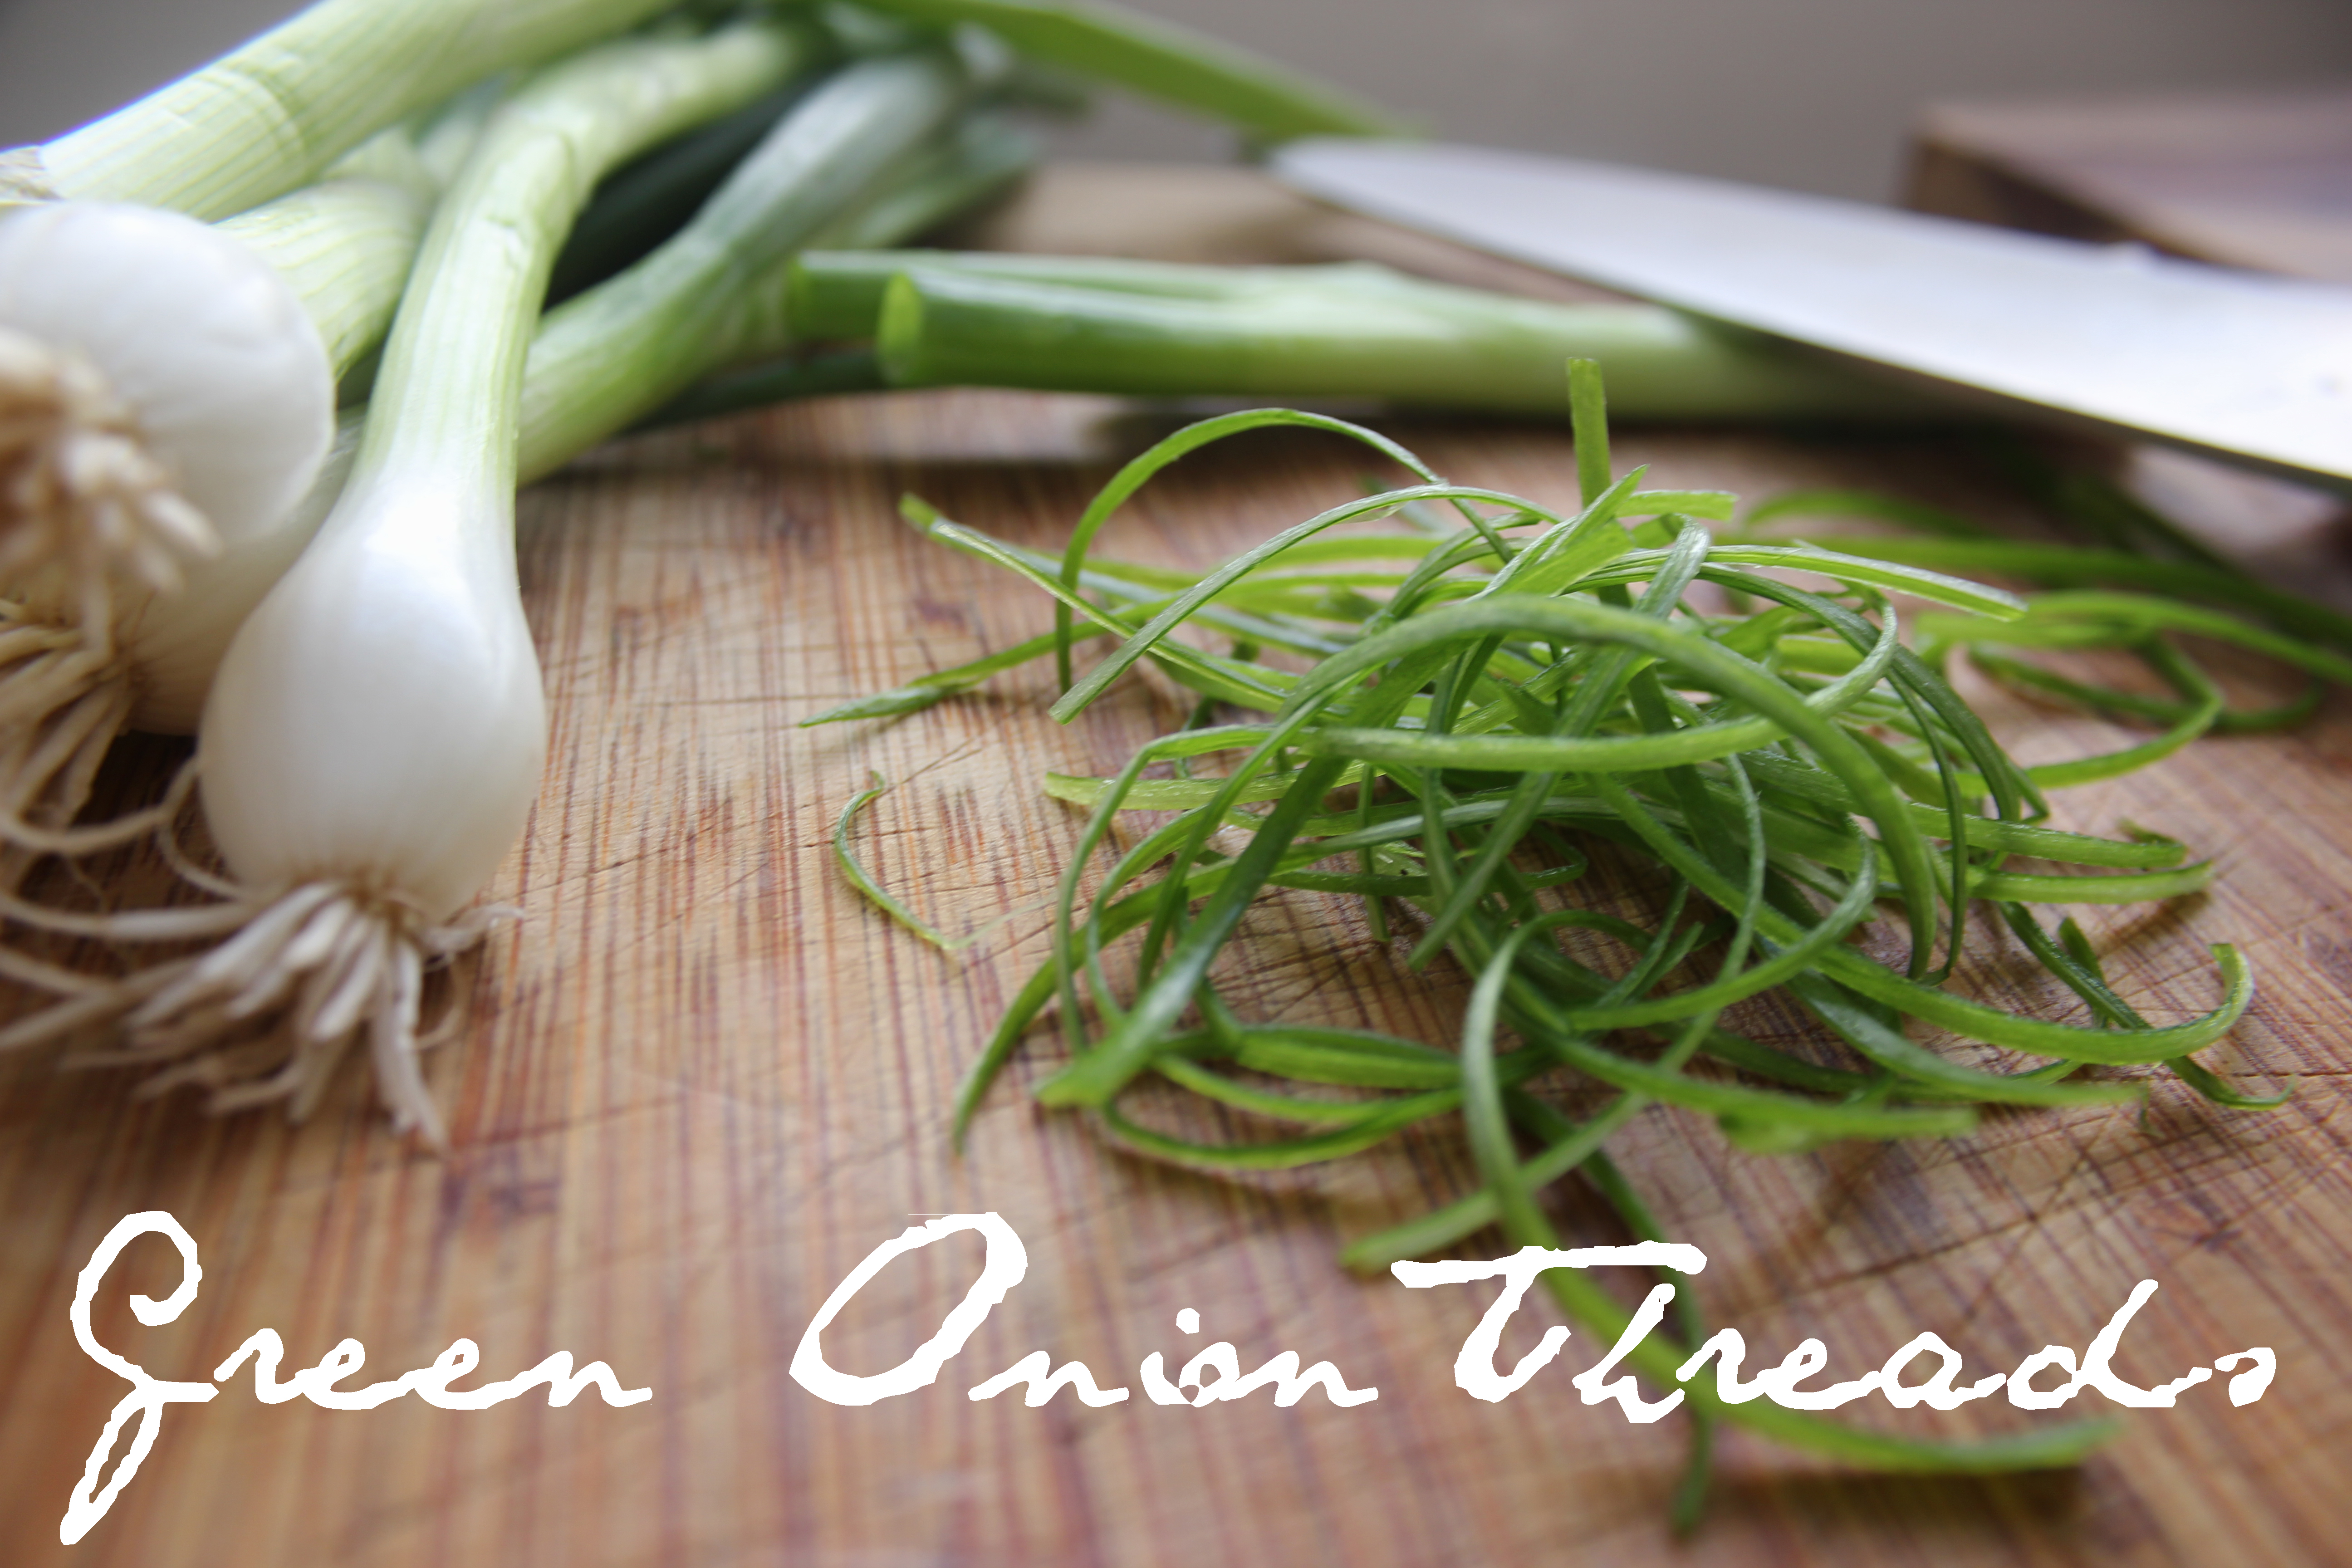 Green Onion Threads